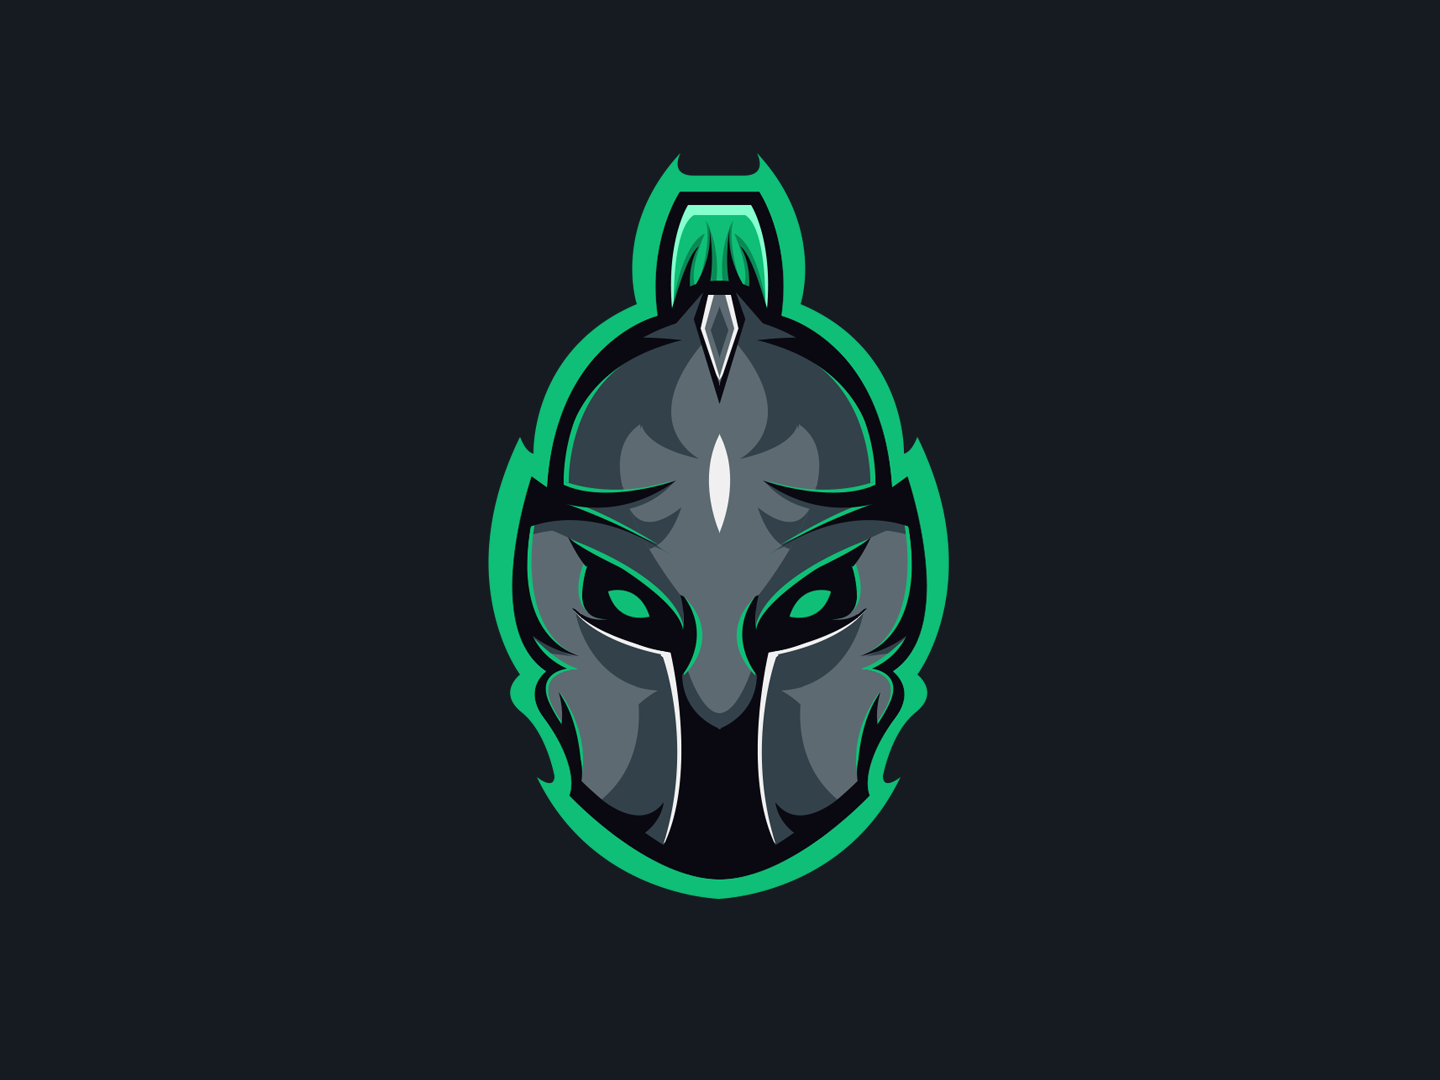 Spartan Mascot Logo by Erik Wiktor Bogren on Dribbble